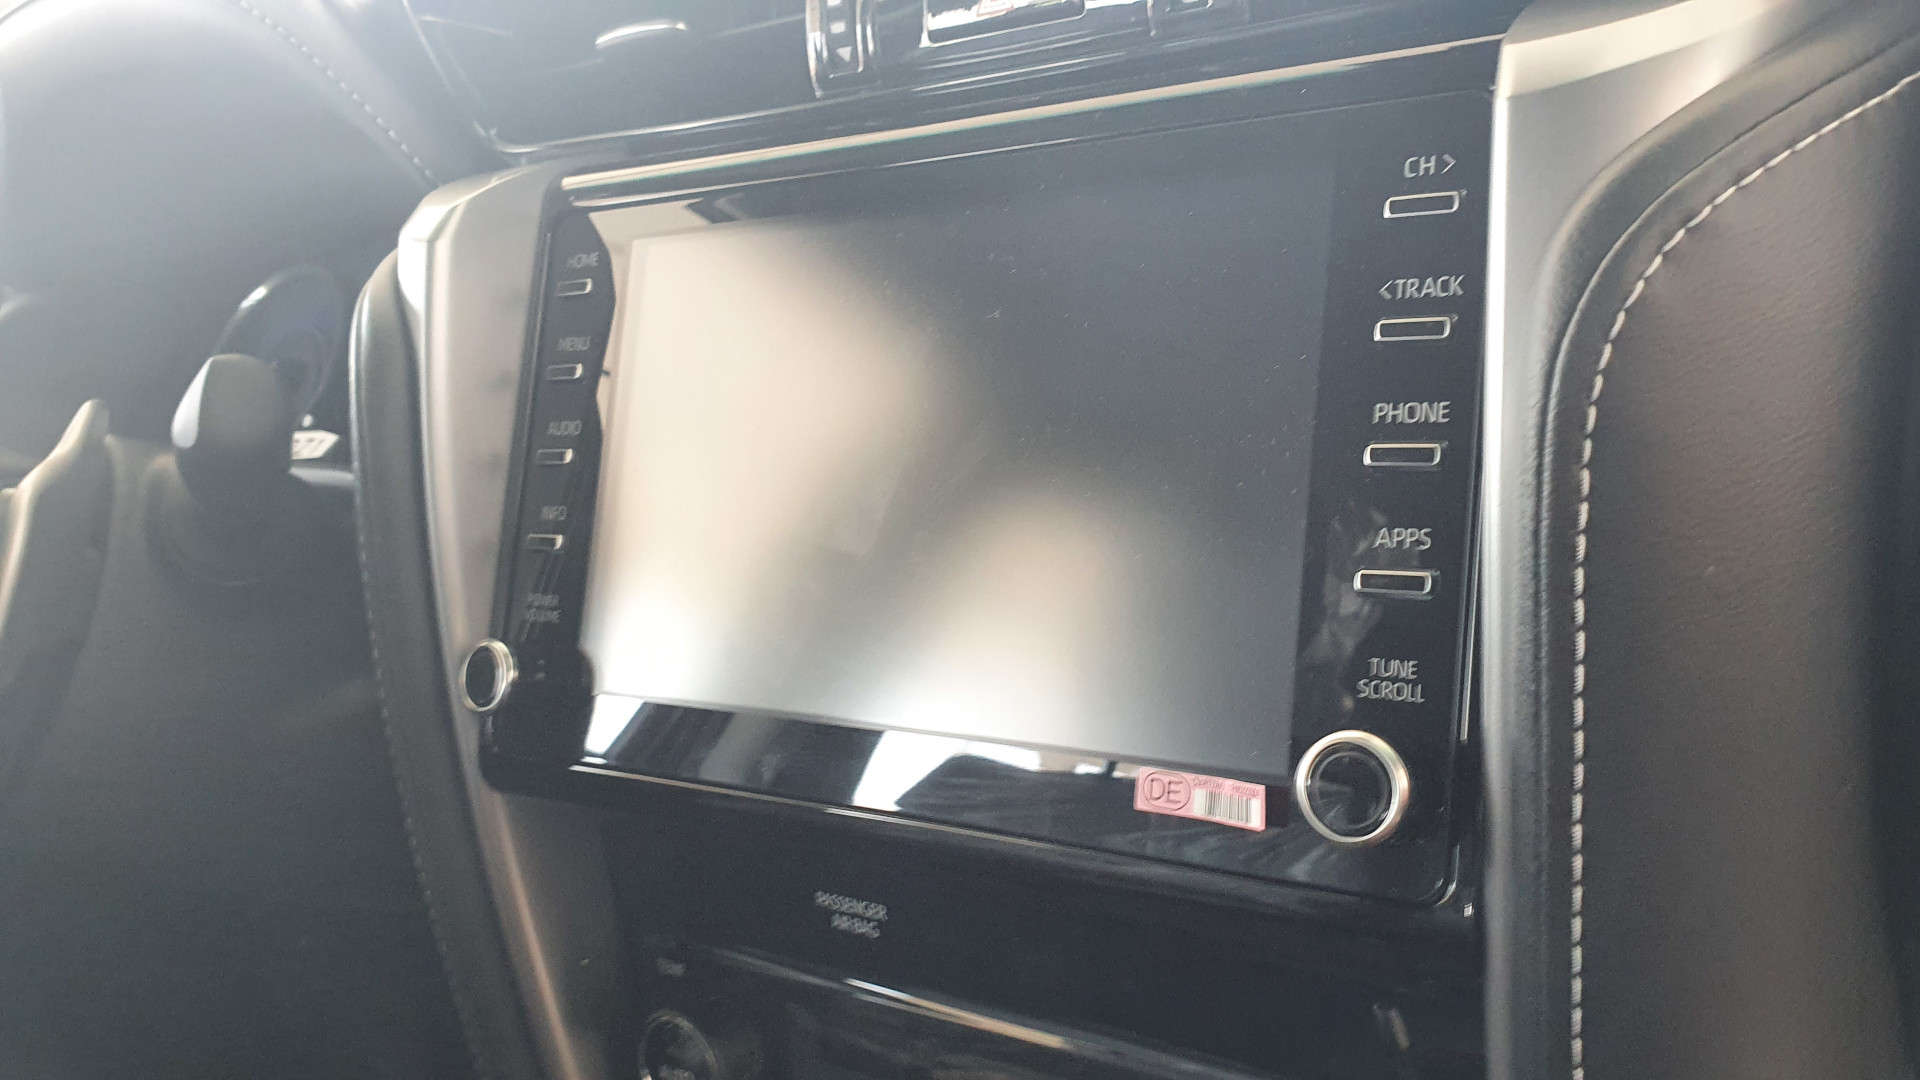 Toyota Fortuner Q 2021 variant infotainment system